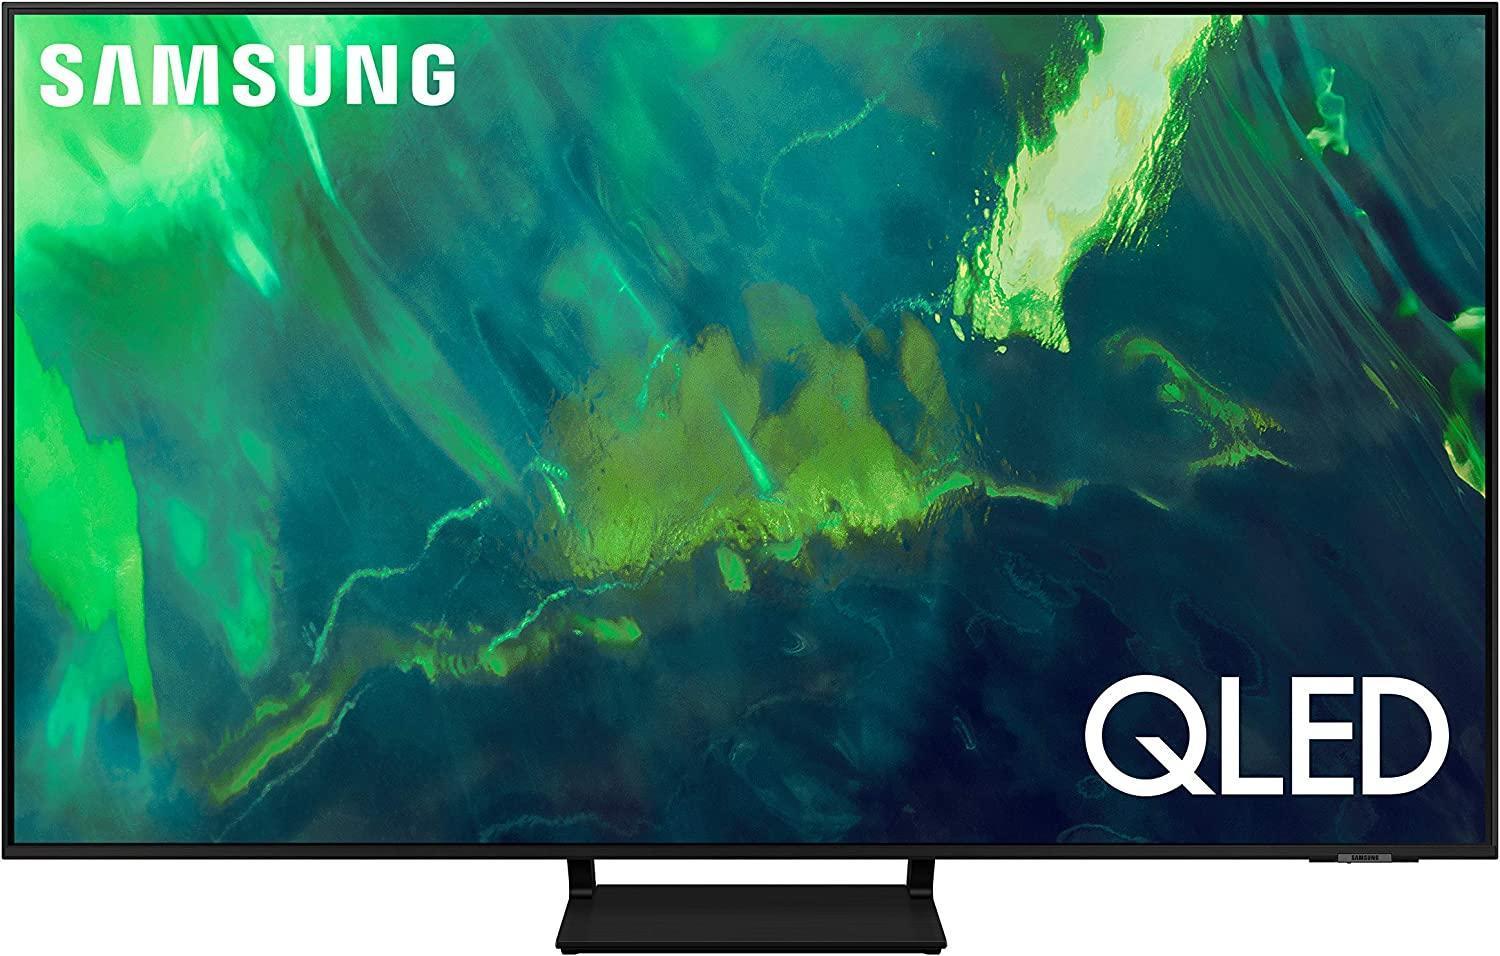 SAMSUNG 75-Inch Class QLED Q70A Series - 4K UHD Quantum HDR Smart TV with Alexa Built-in (QN75Q70AAFXZA)